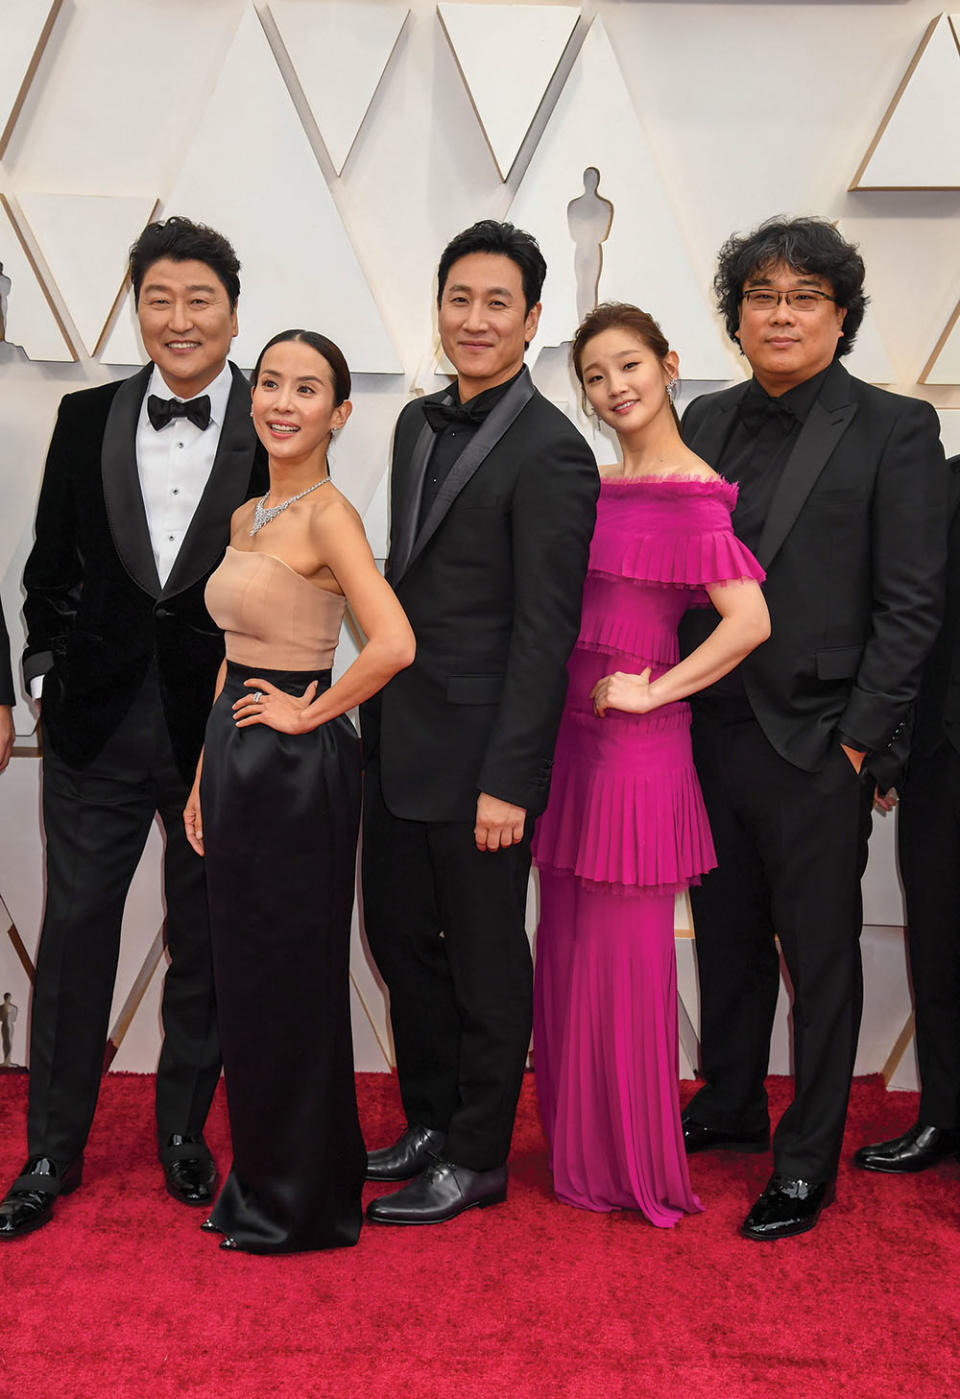 With castmates Cho Yeo-jeong, Lee Sun-kyun and Park So-Dam and director Bong Joon Ho at the 2020 Oscars.